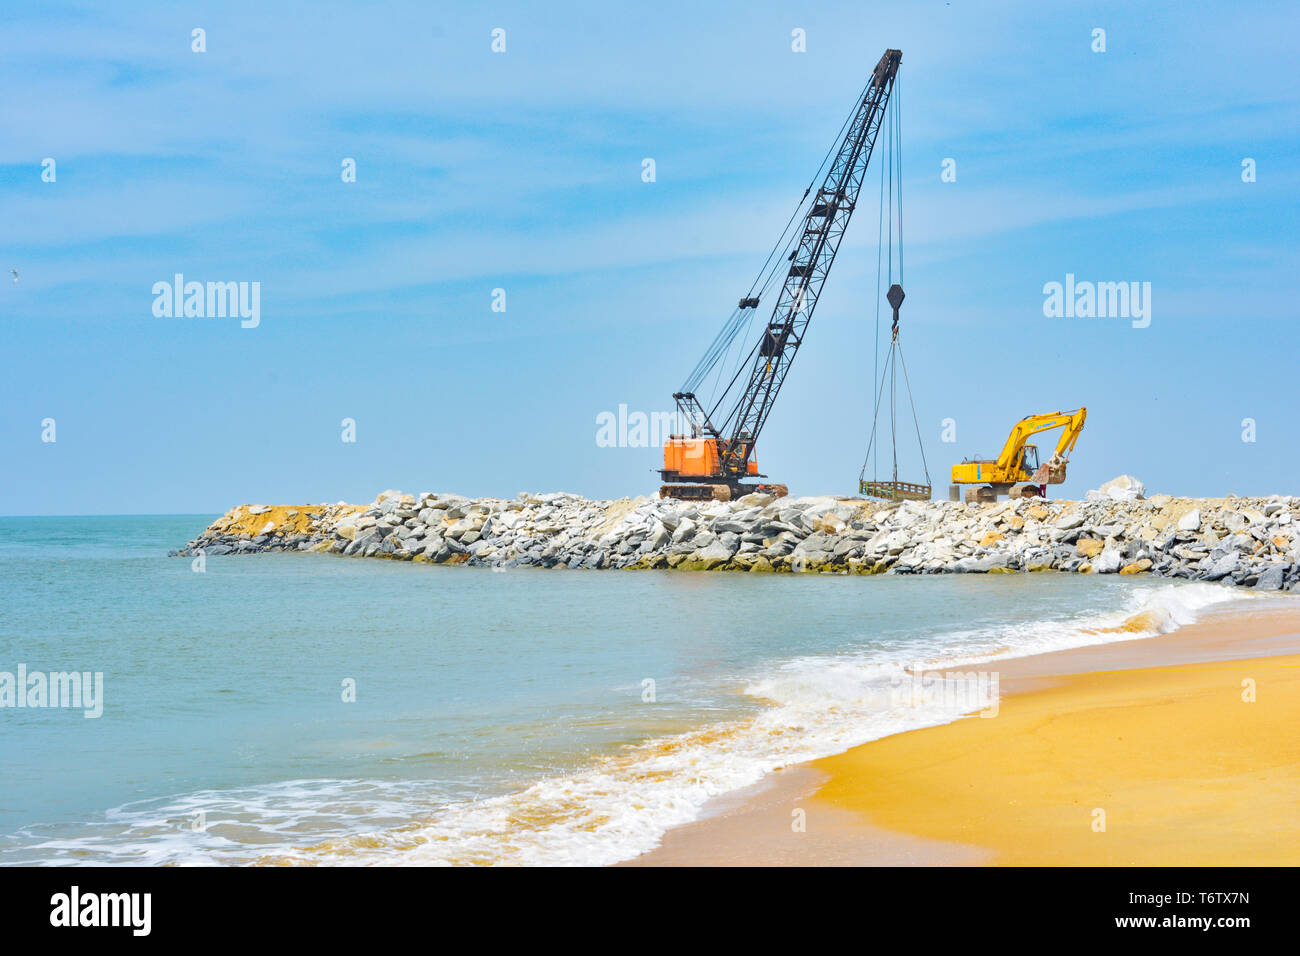 Udupi, India - NOVEMBER 11 2017: Industrial crane working in the coastal area Stock Photo